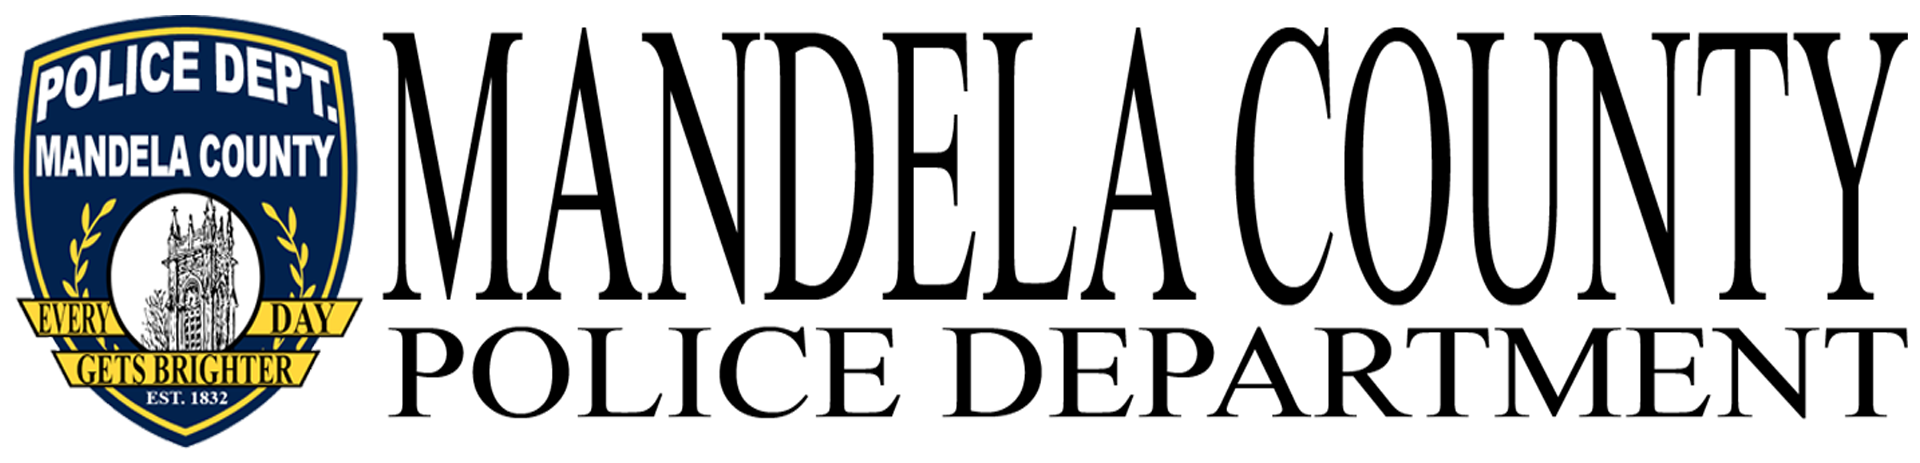 Mandela County Police Department